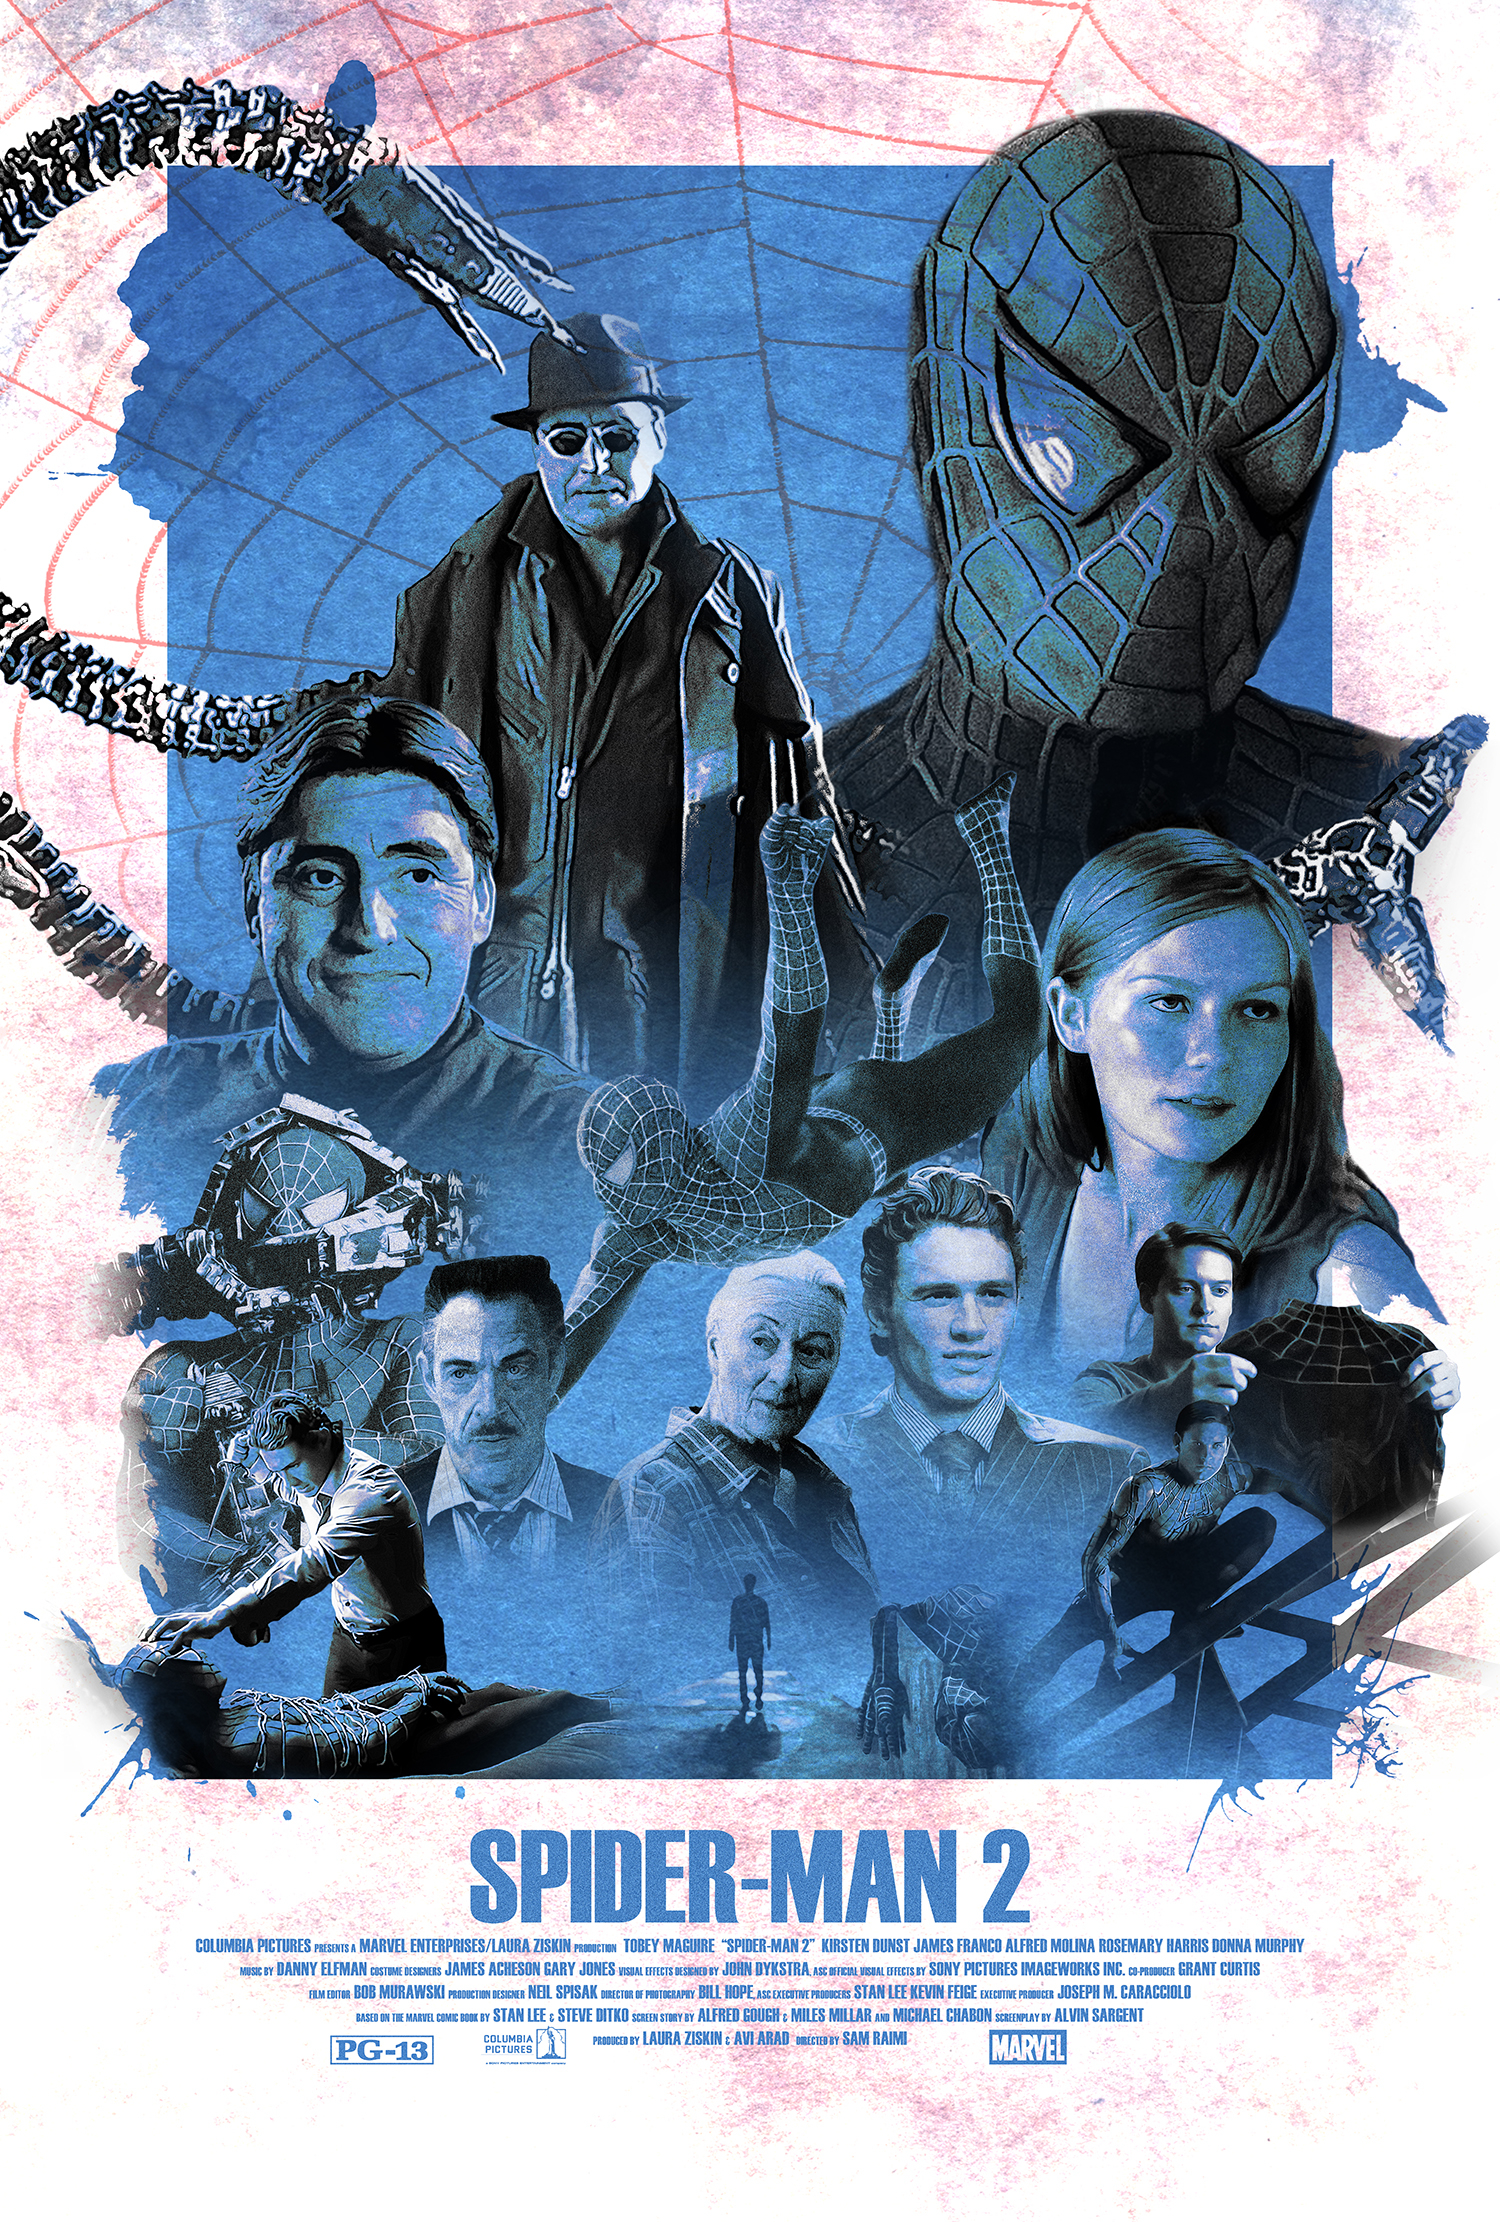 Spider-Man 2 (2004) - Movie Review : Alternate Ending